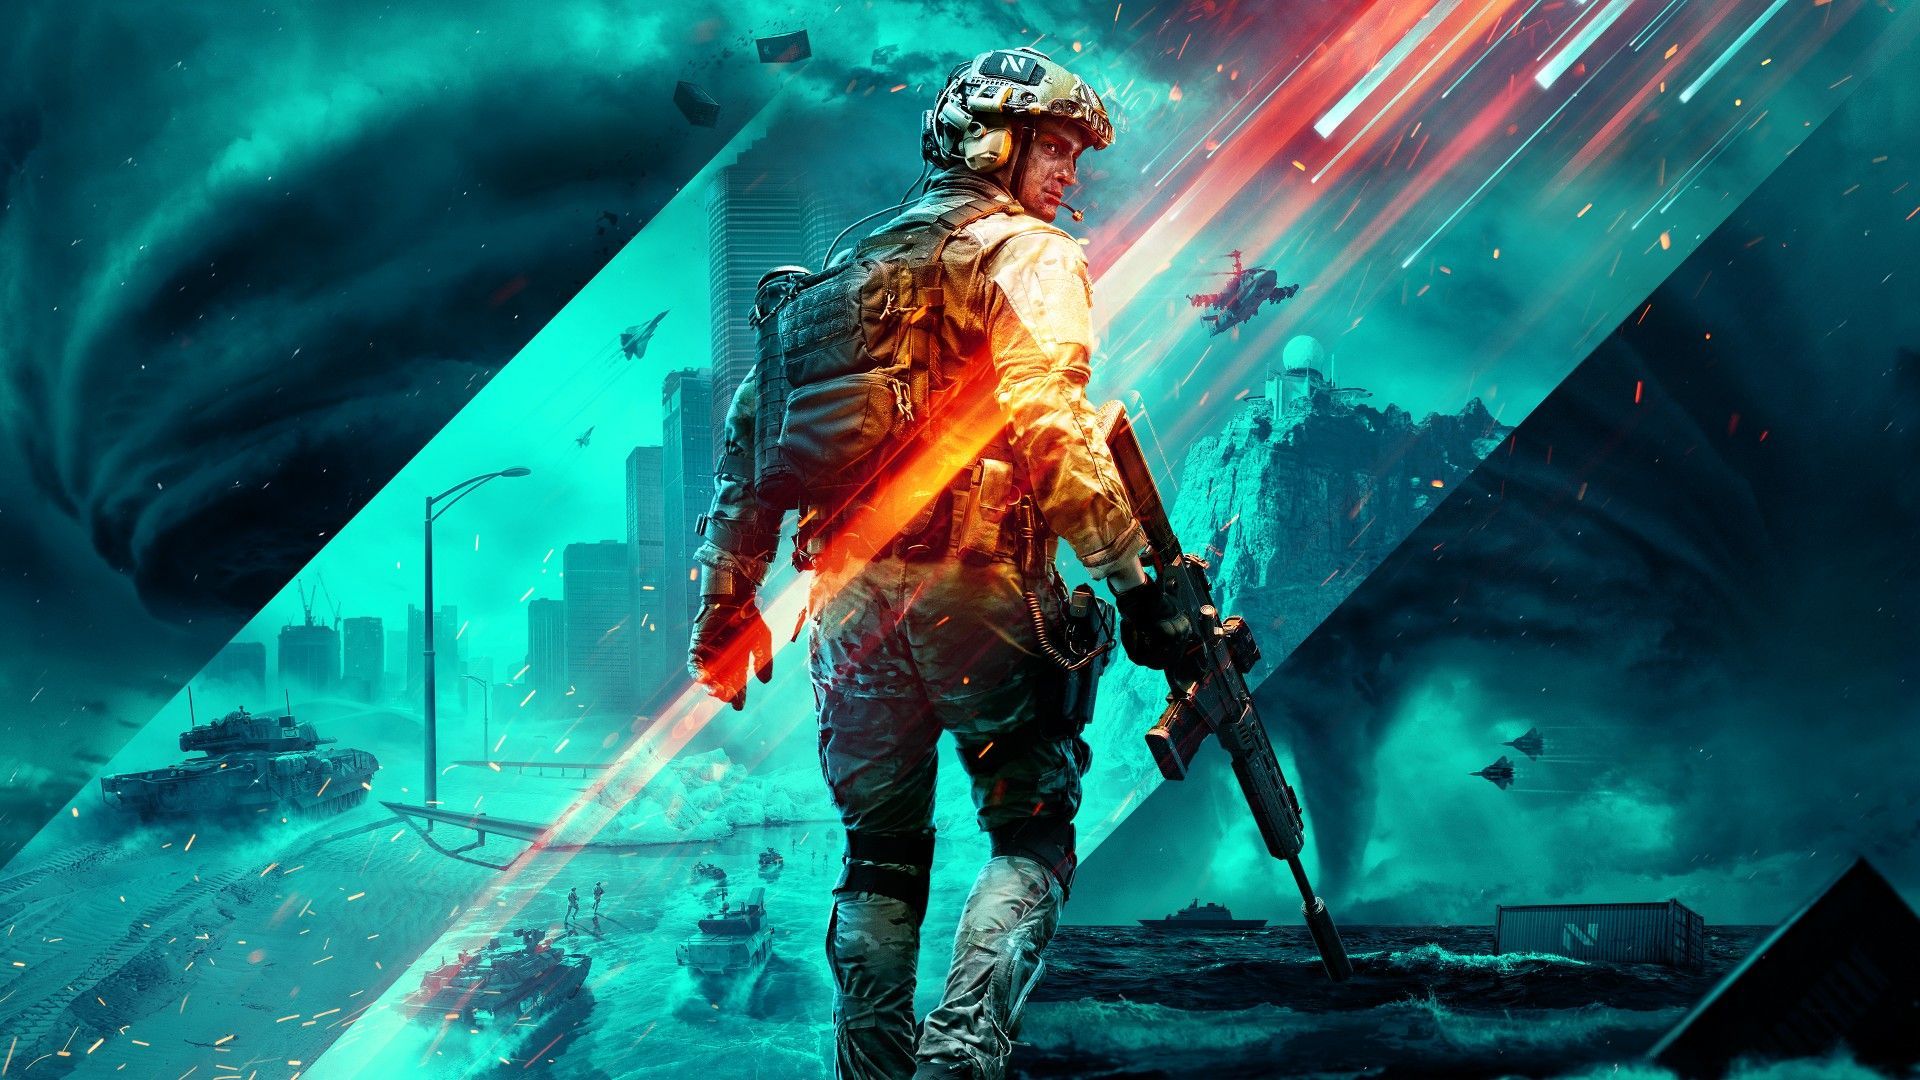 Battlefield 2042 Key Art, Screenshots, and Specialist System Leak Via Origin Before EA's Official Reveal